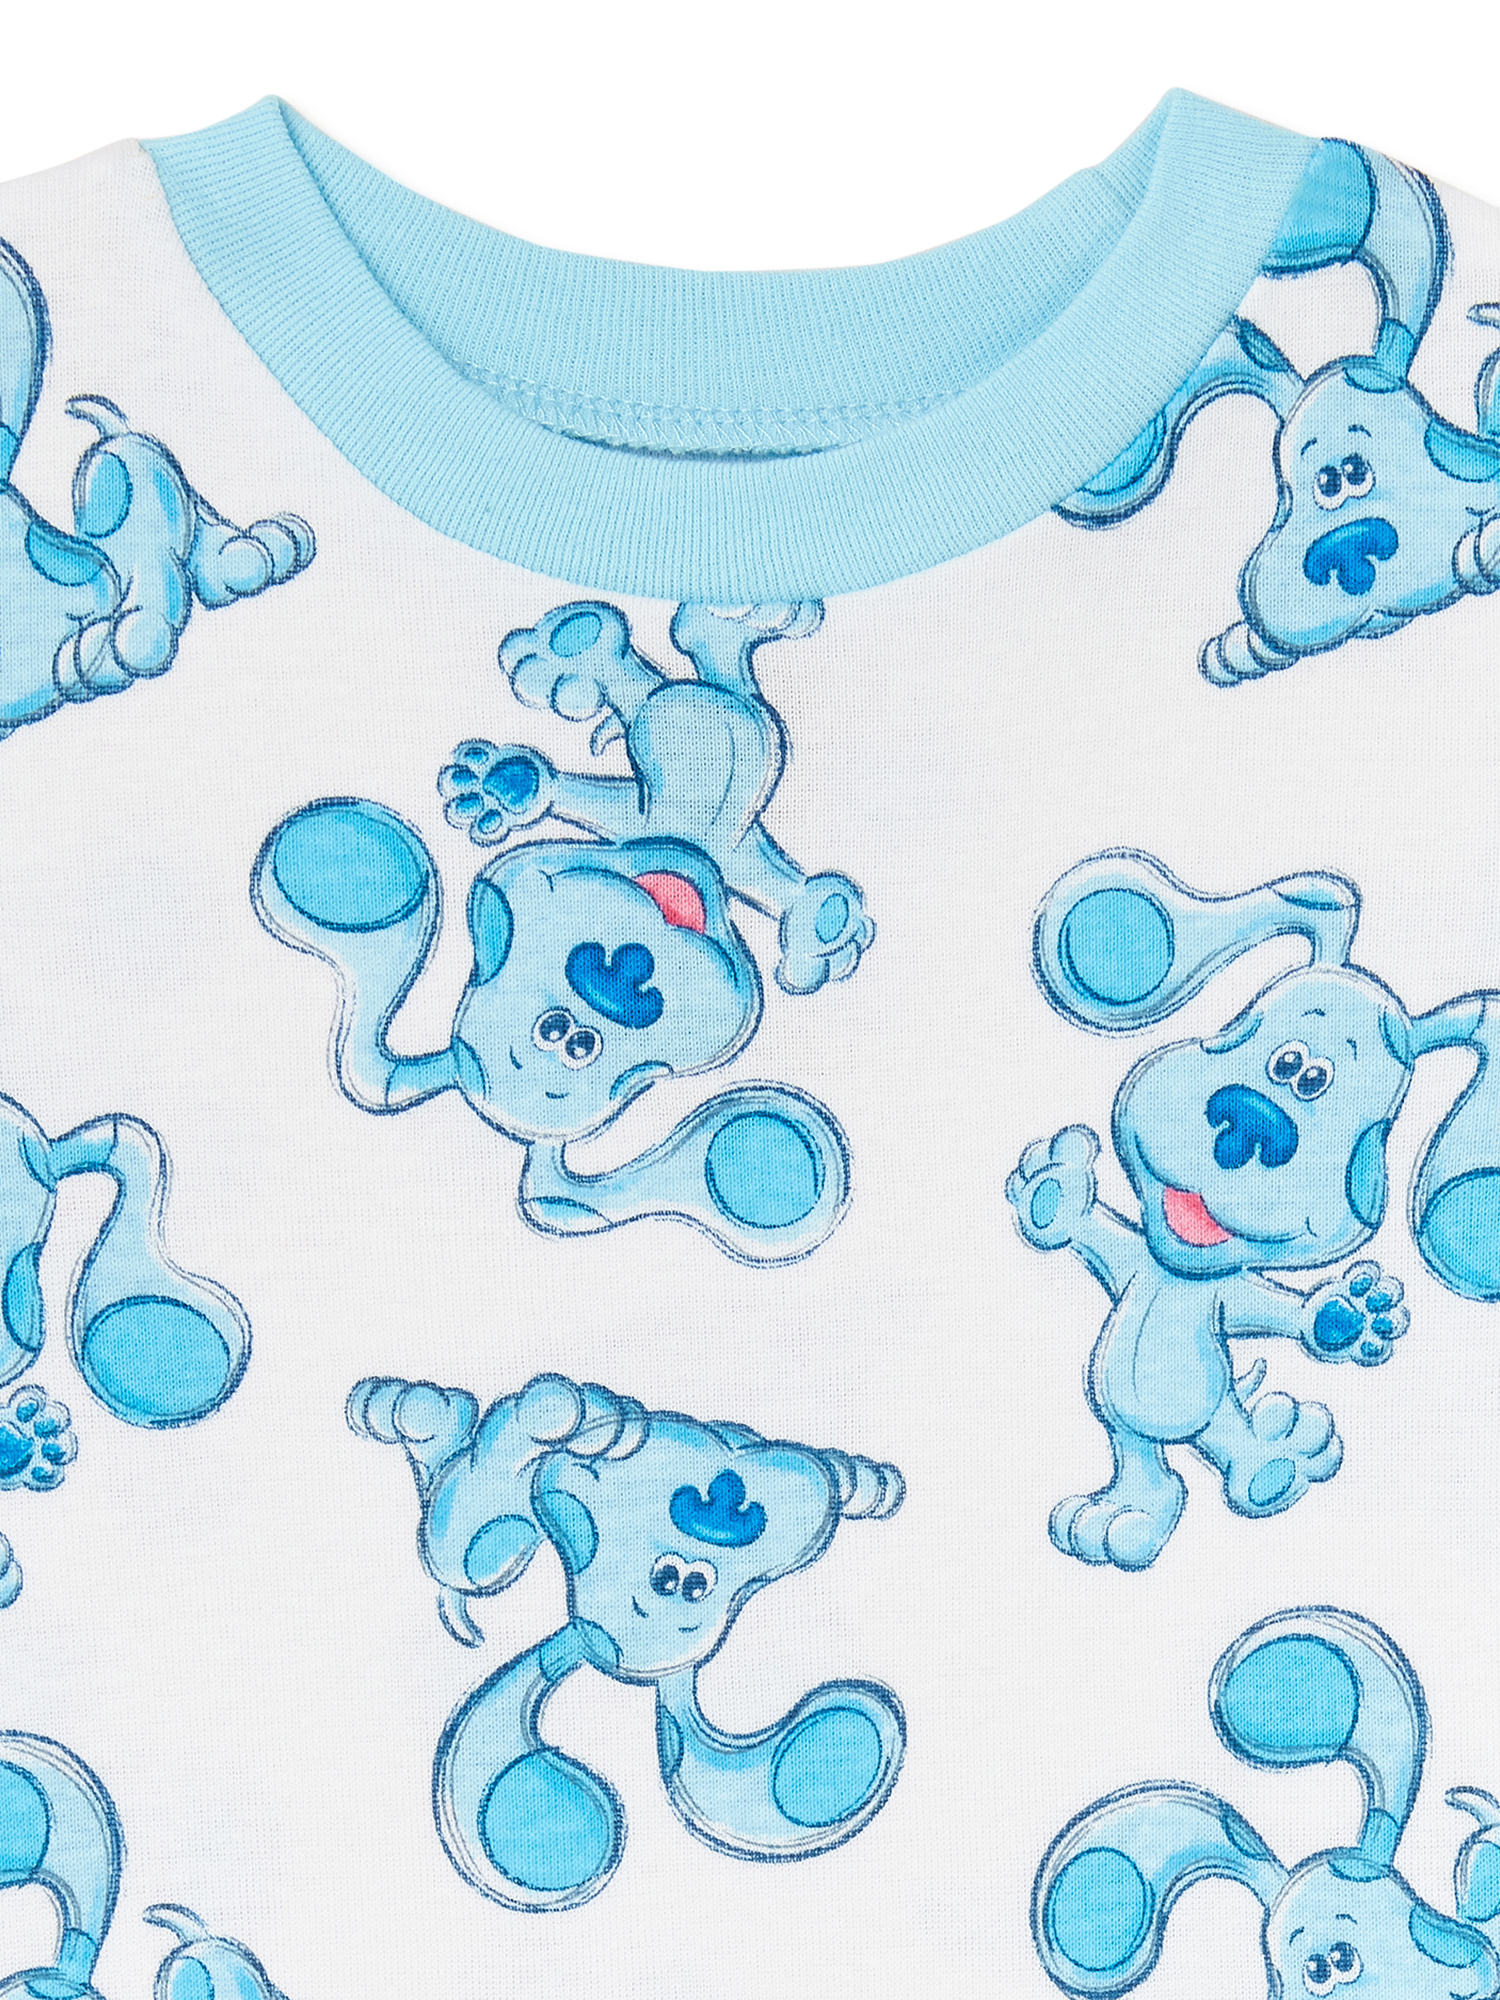 Blue's Clues Toddler Boy Cotton T-Shirt, Short, and Pant Pajama Set, 4-Piece, Sizes 2T-4T - image 4 of 4